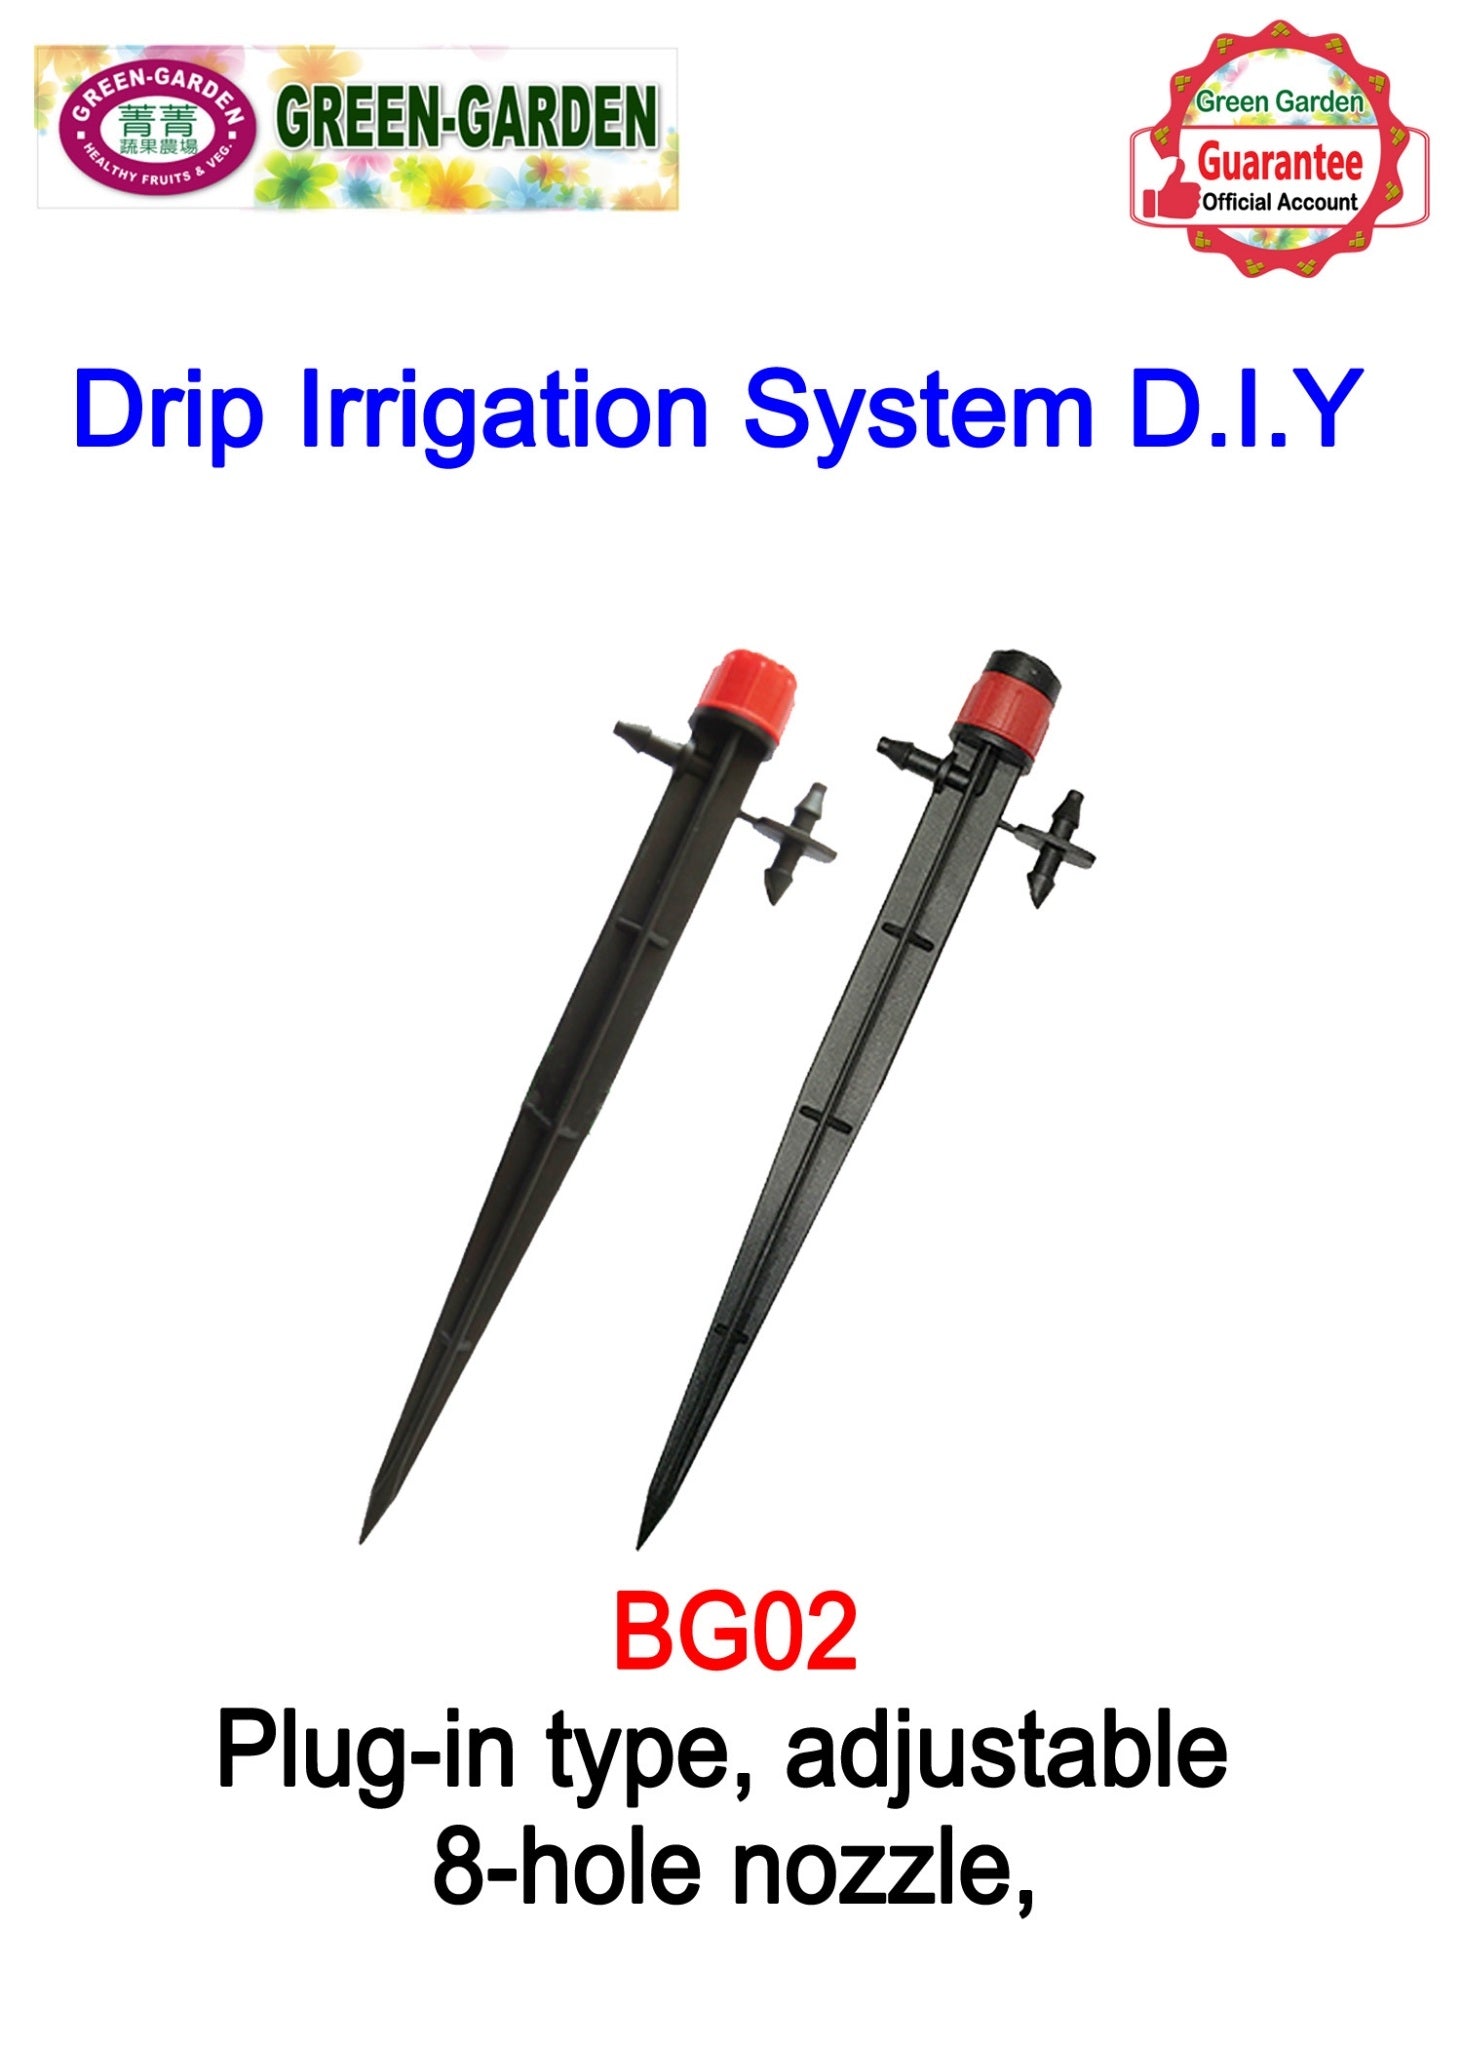 Drip Irrigation System - Plug-in type, adjustable 8-hole nozzle (10pcs) BG02